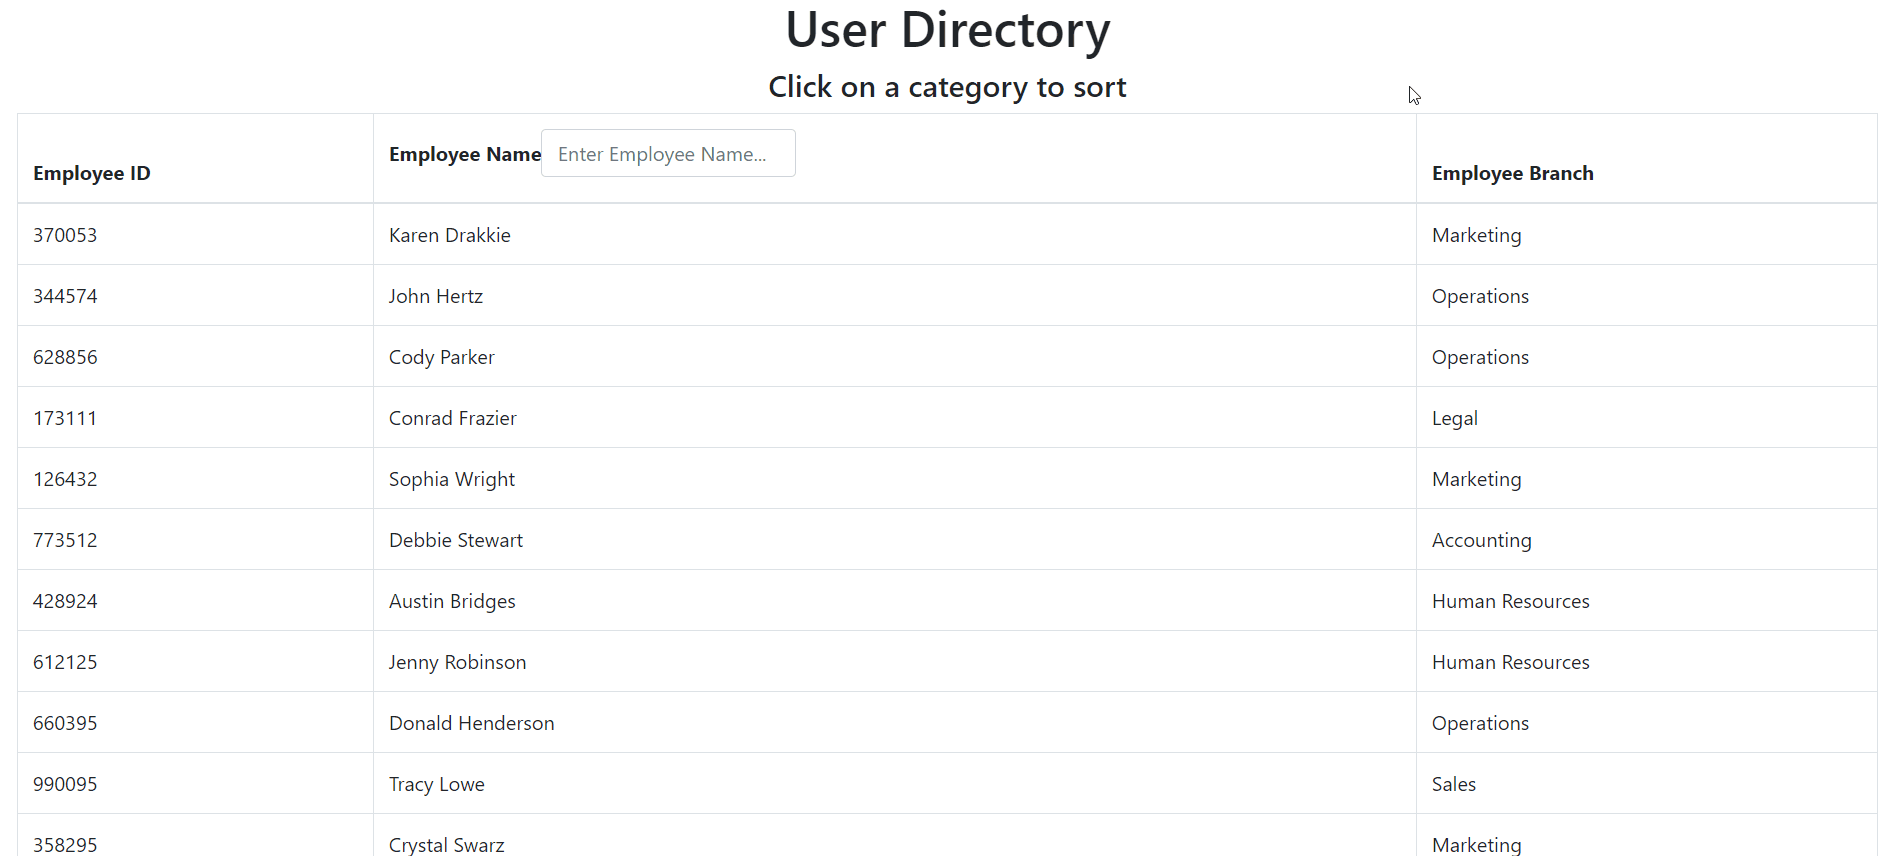 User Directory13